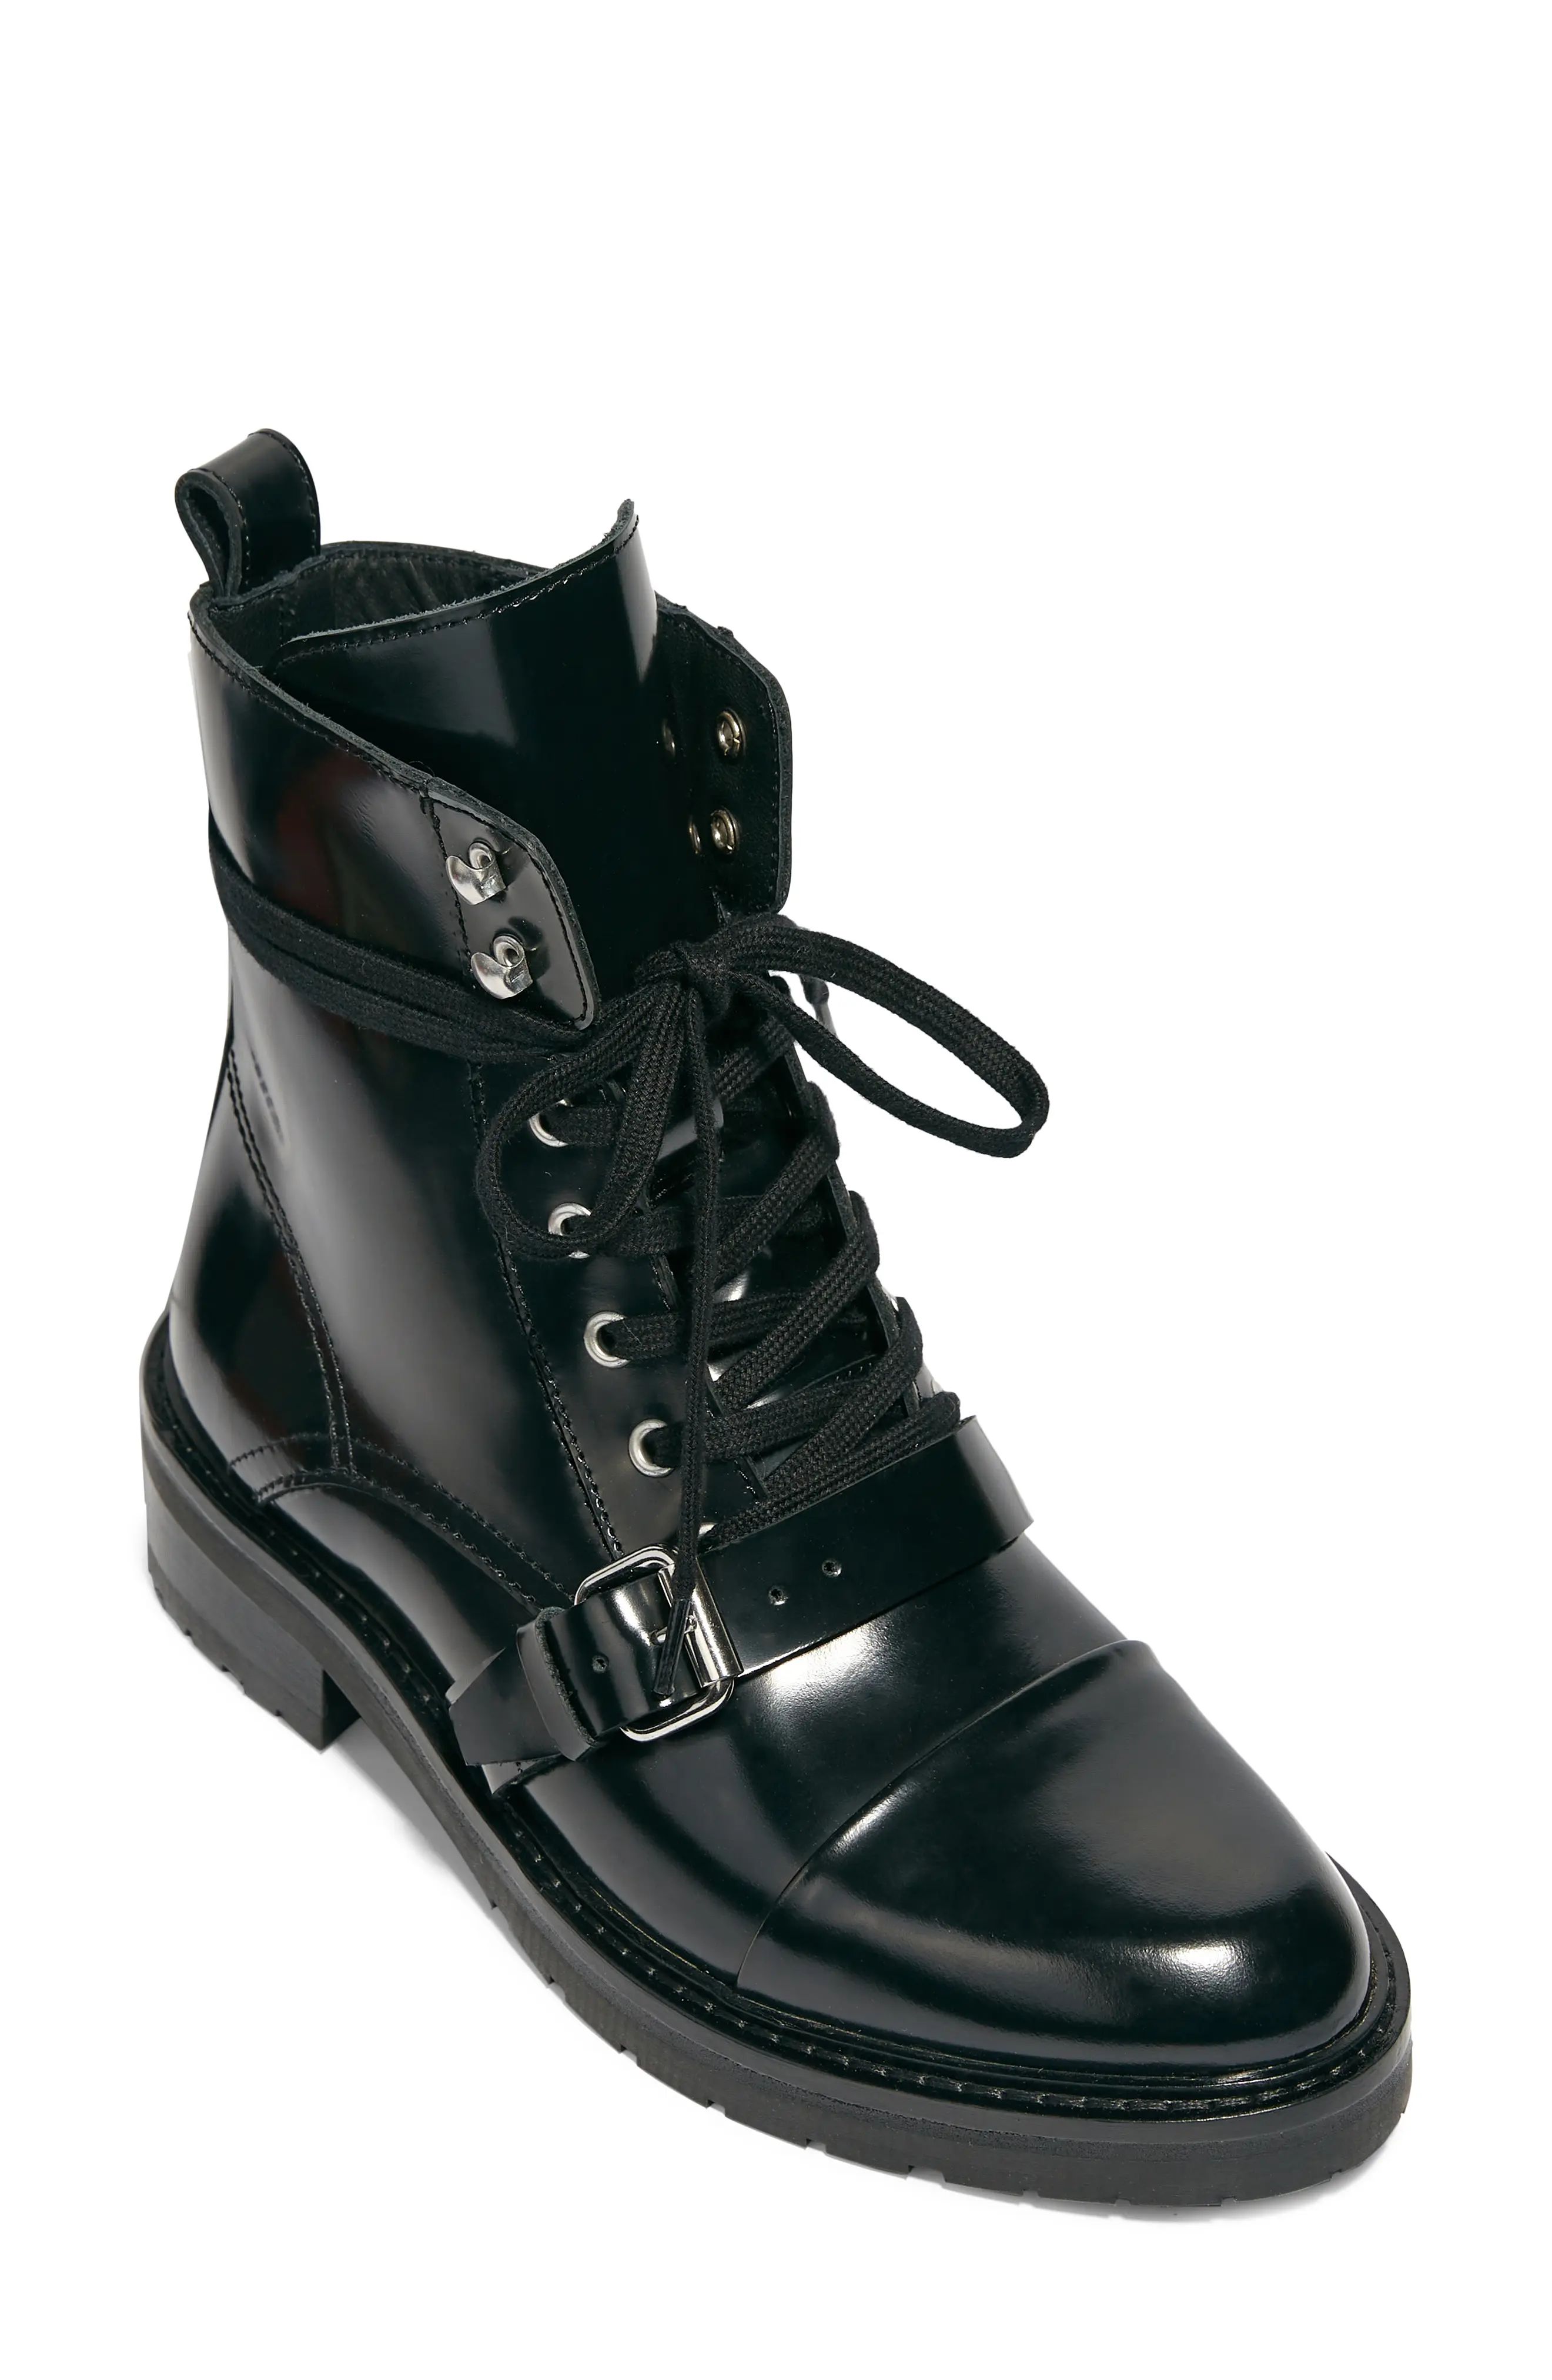 AllSaints Donita Combat Boot, Size 5Us in Black/Black Leather at Nordstrom | Nordstrom